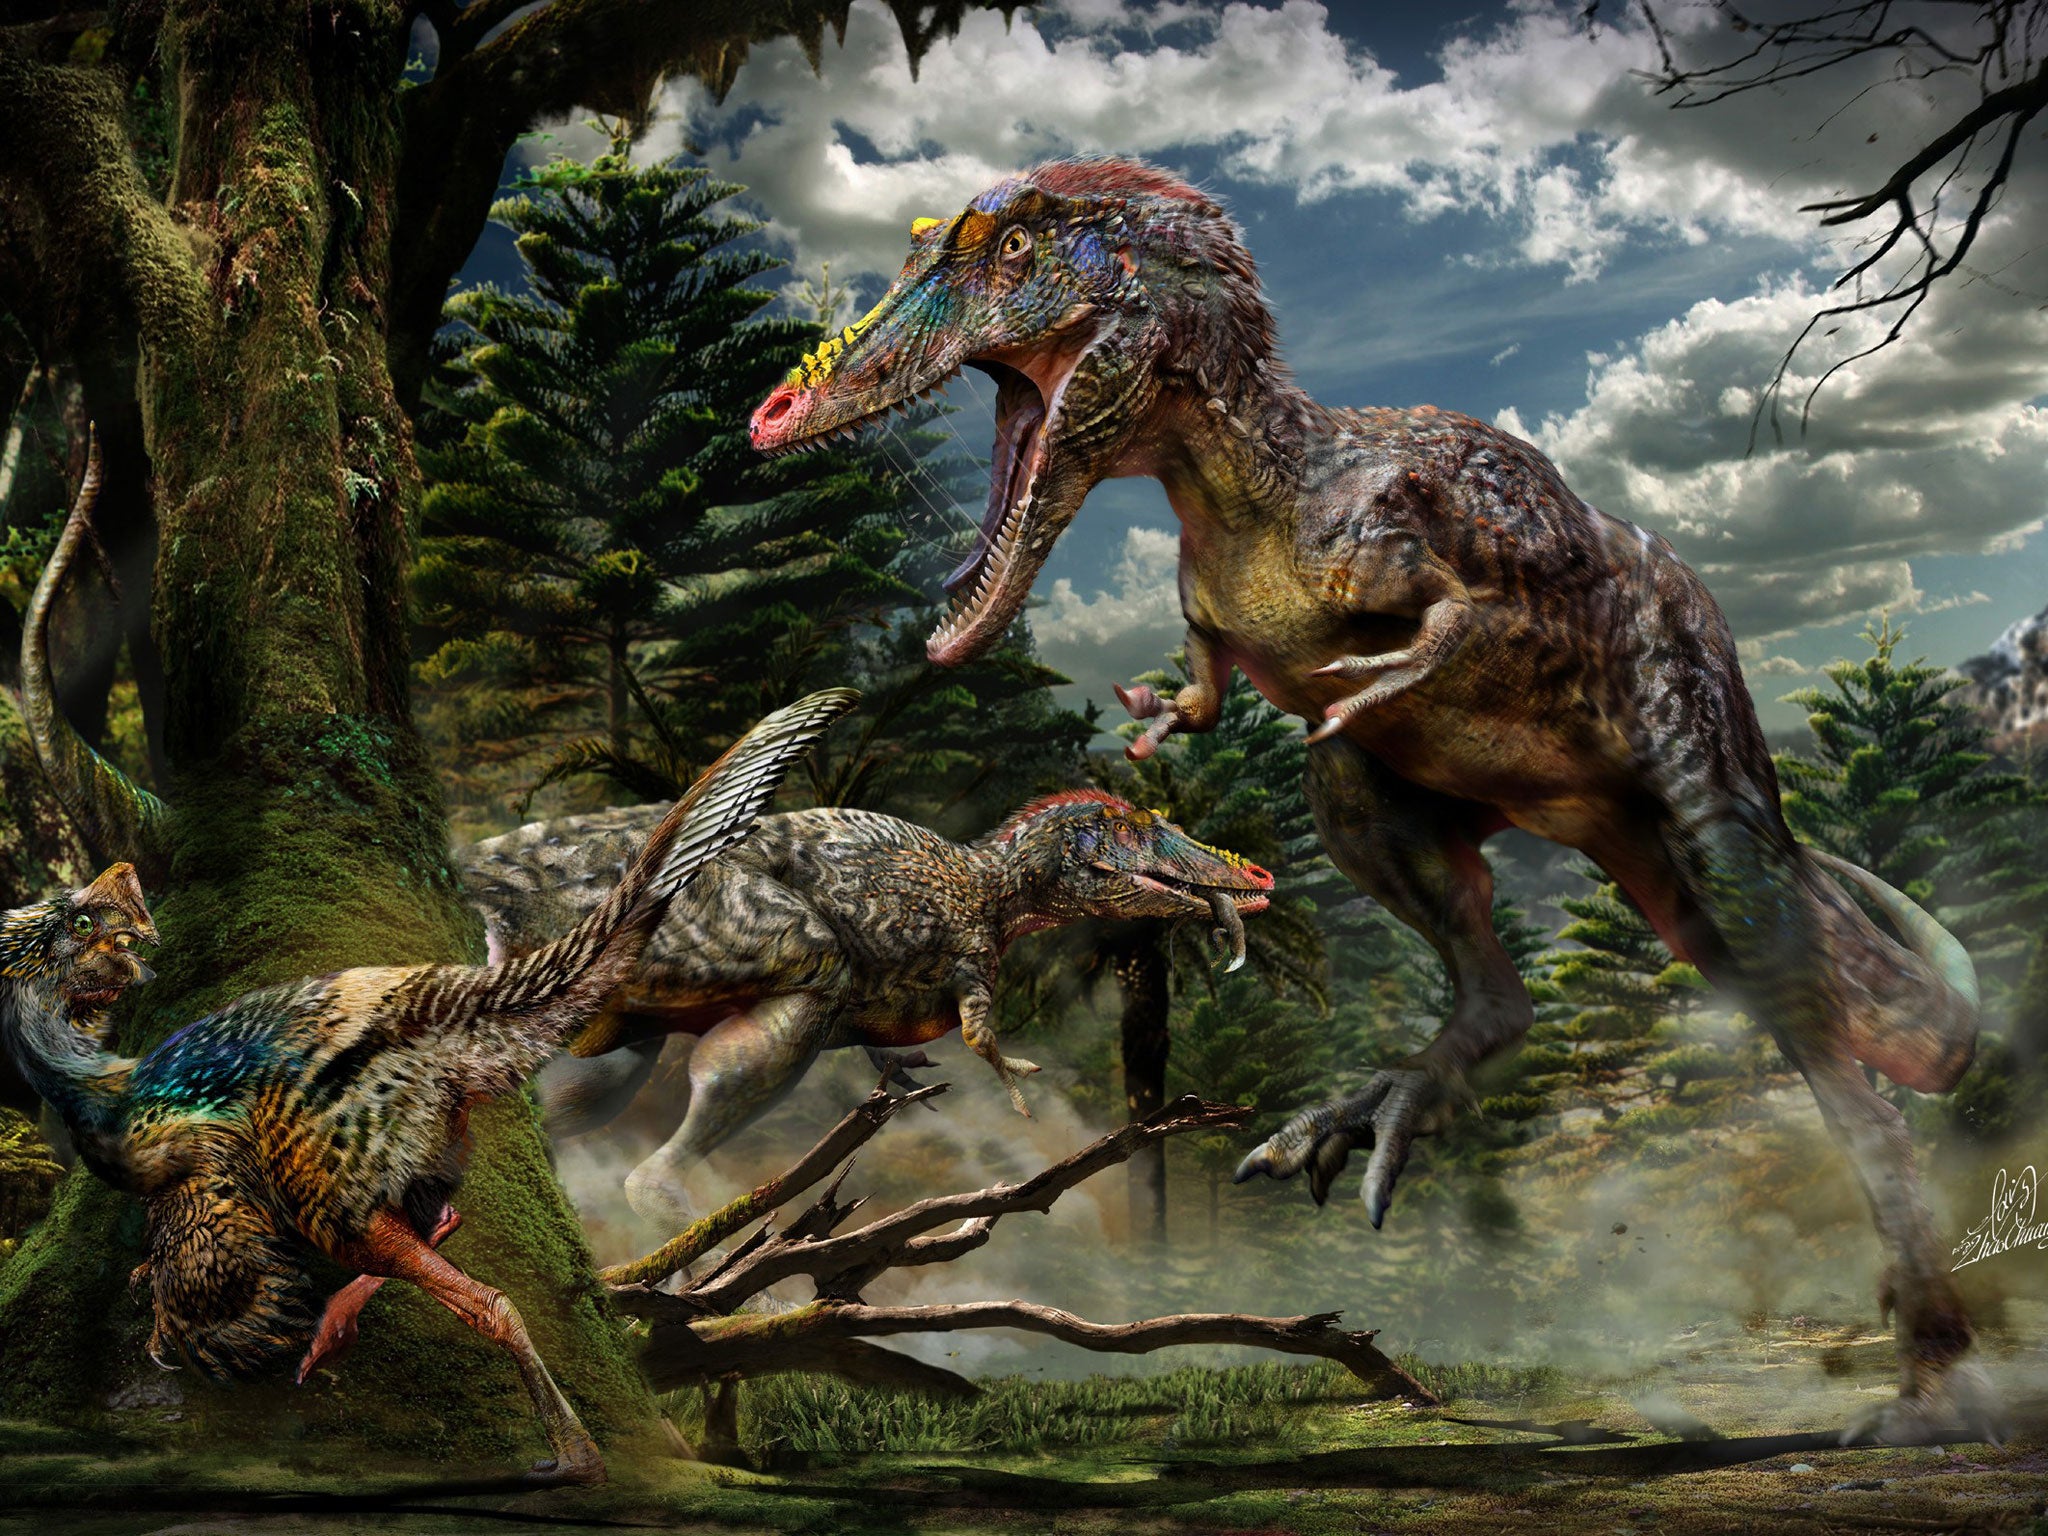 An artist's impression of a new species of dinosaur, called Qianzhousaurus sinensis